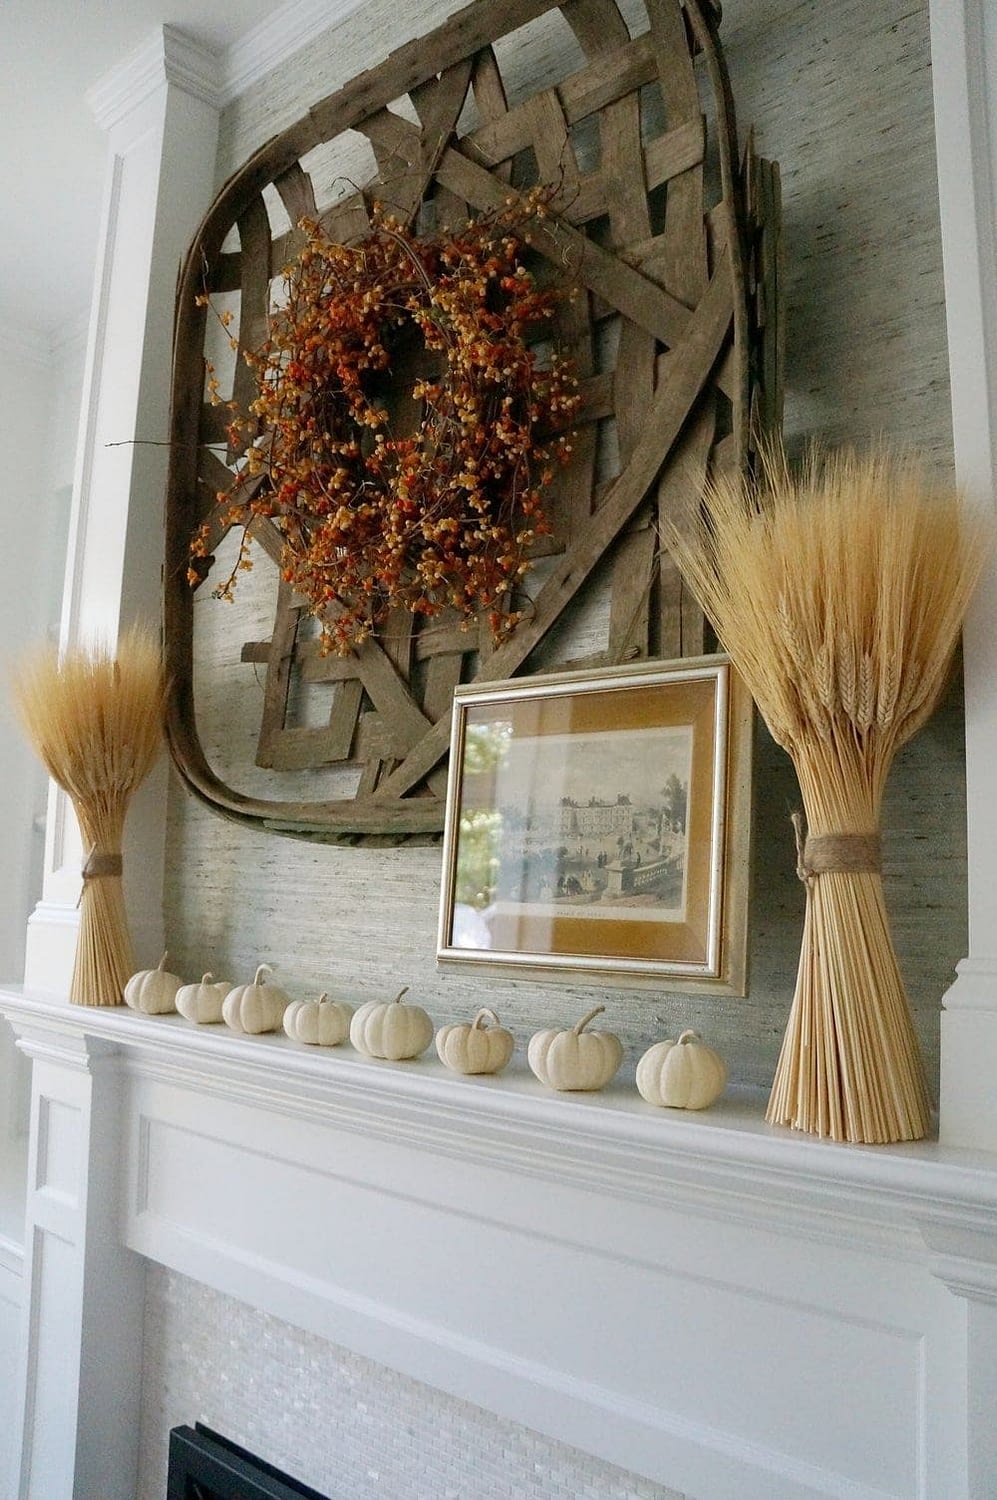 Fall mantel ideas using tobacco baskets, wreaths and dried wheat bundles